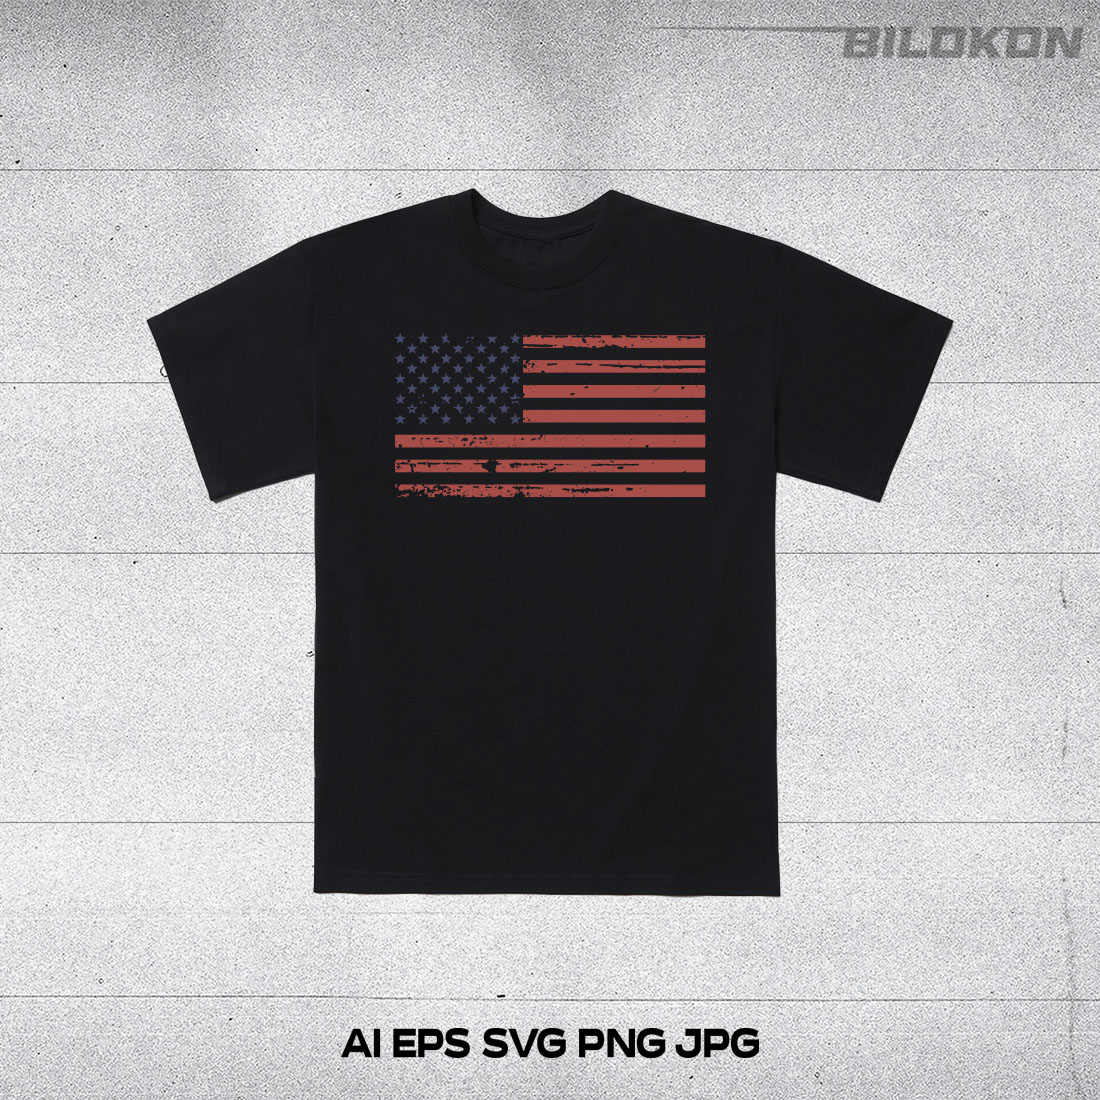 Grunge American flag, USA flag, SVG Vector preview image.